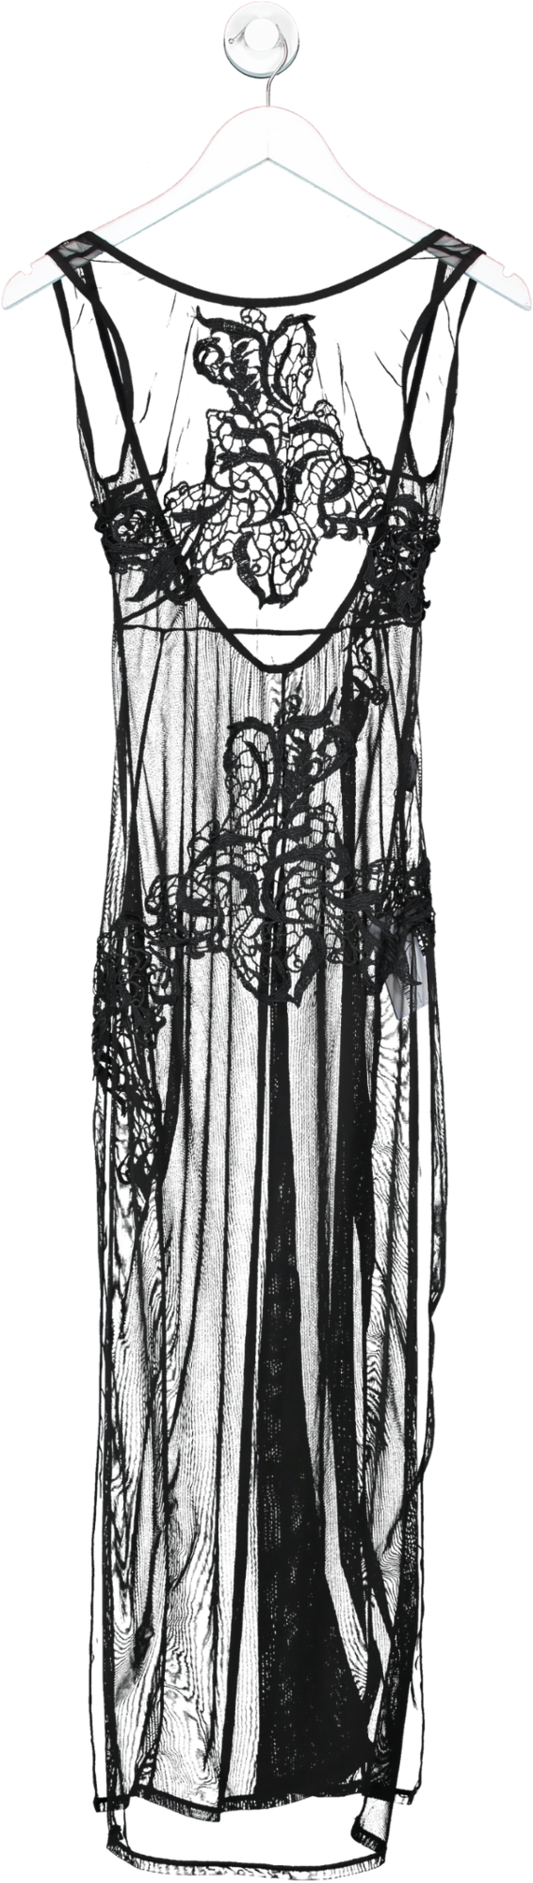 Bluebella Black Long Chemise Nightdress UK 8